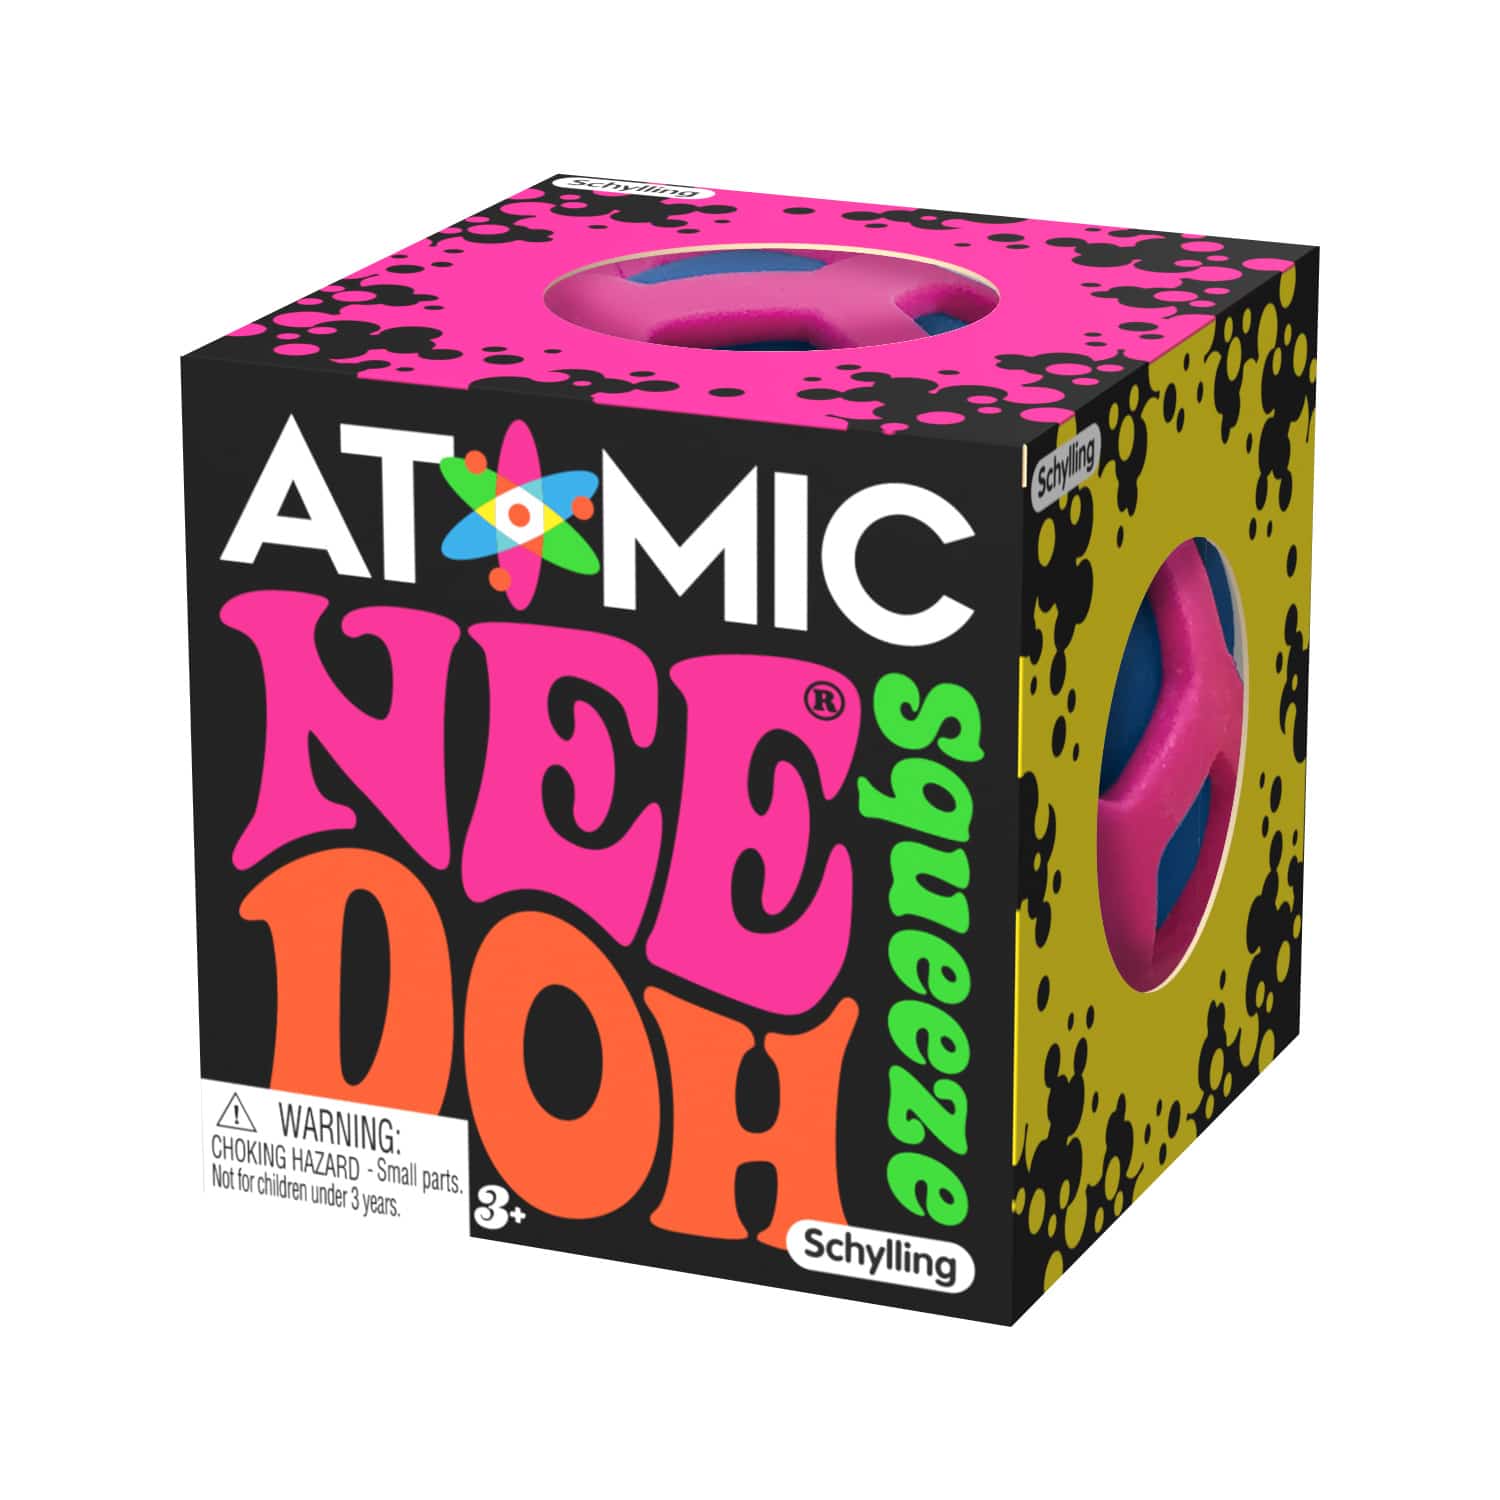 Atomic Nee Doh ATND